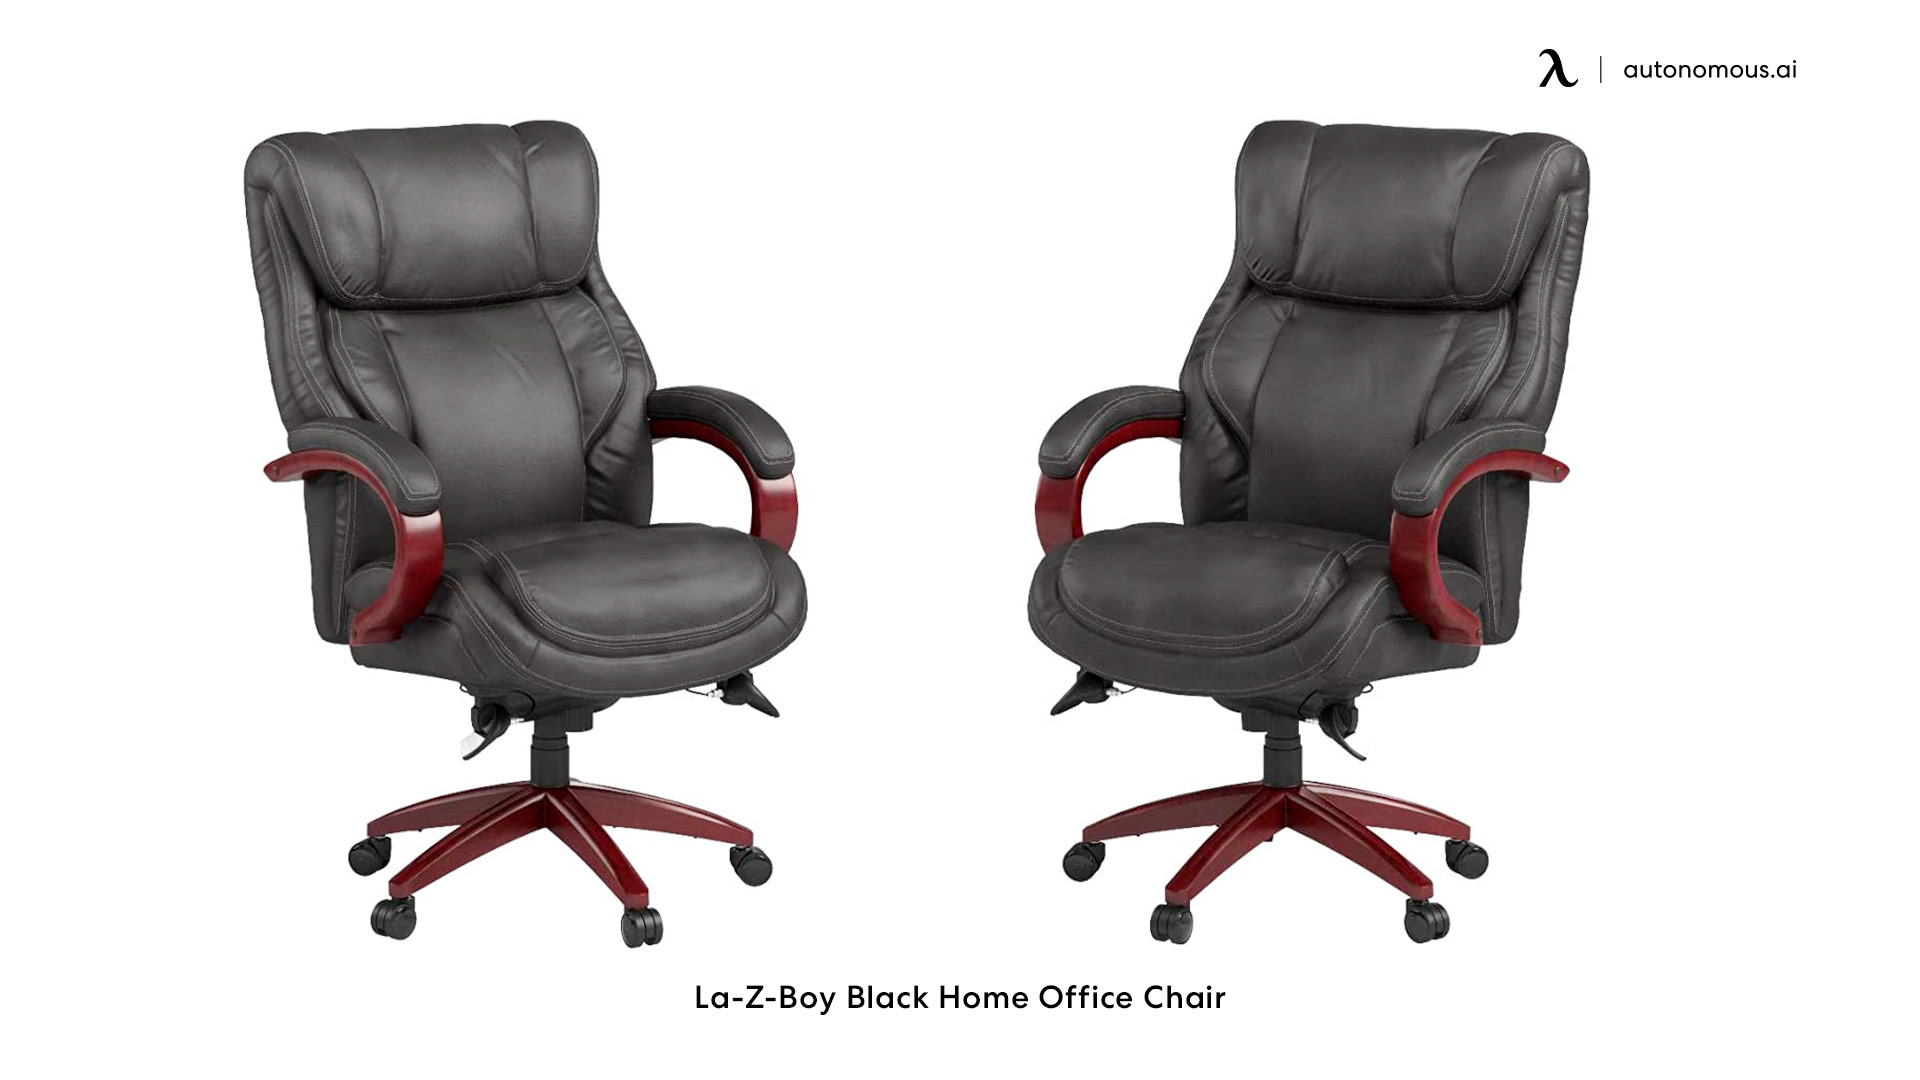 La-Z-Boy Black Home Office Chair